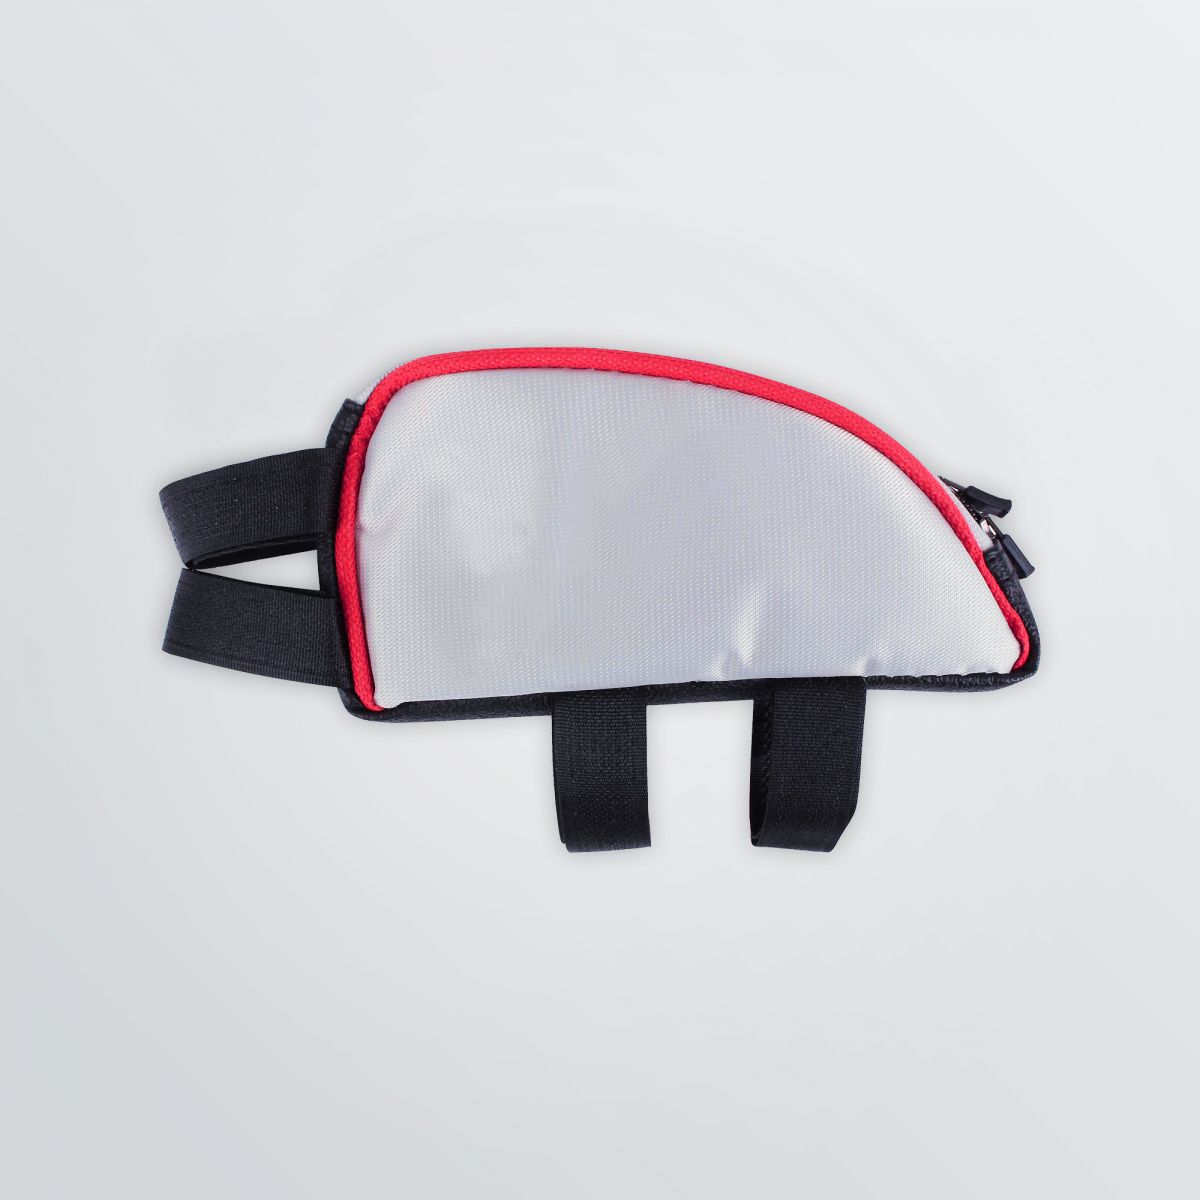 aero bikecase white-red colour example with velcro fastener - sideview